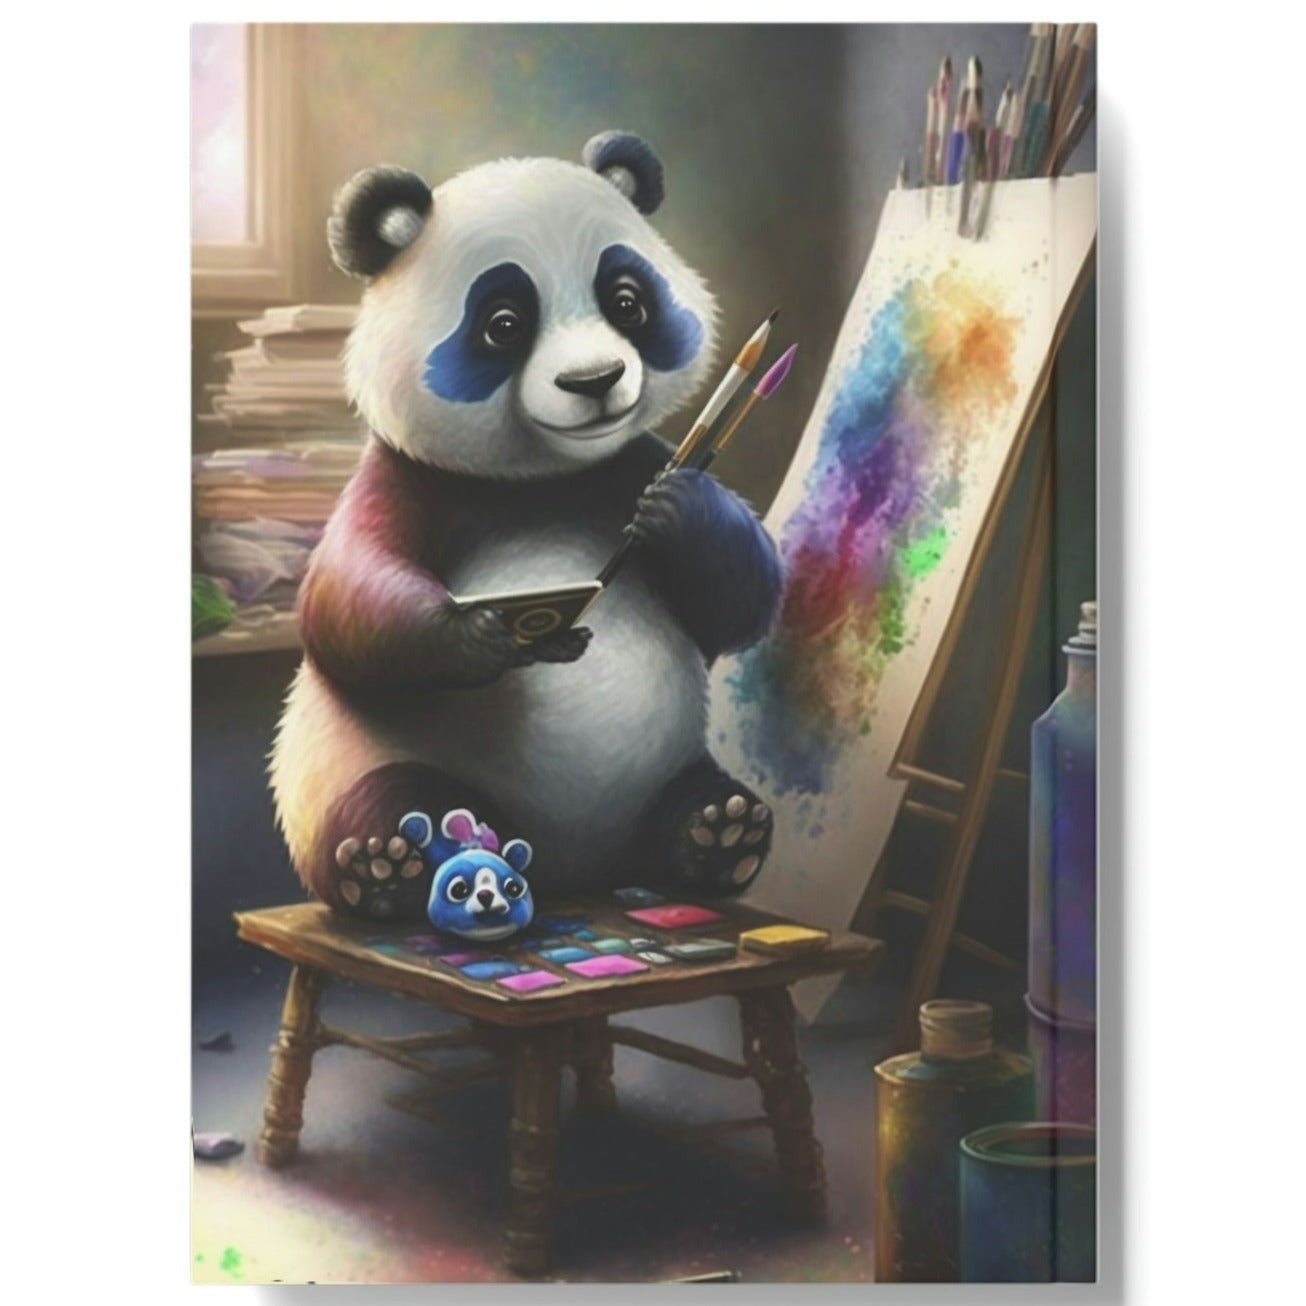 Artist Panda Hard Backed Journal